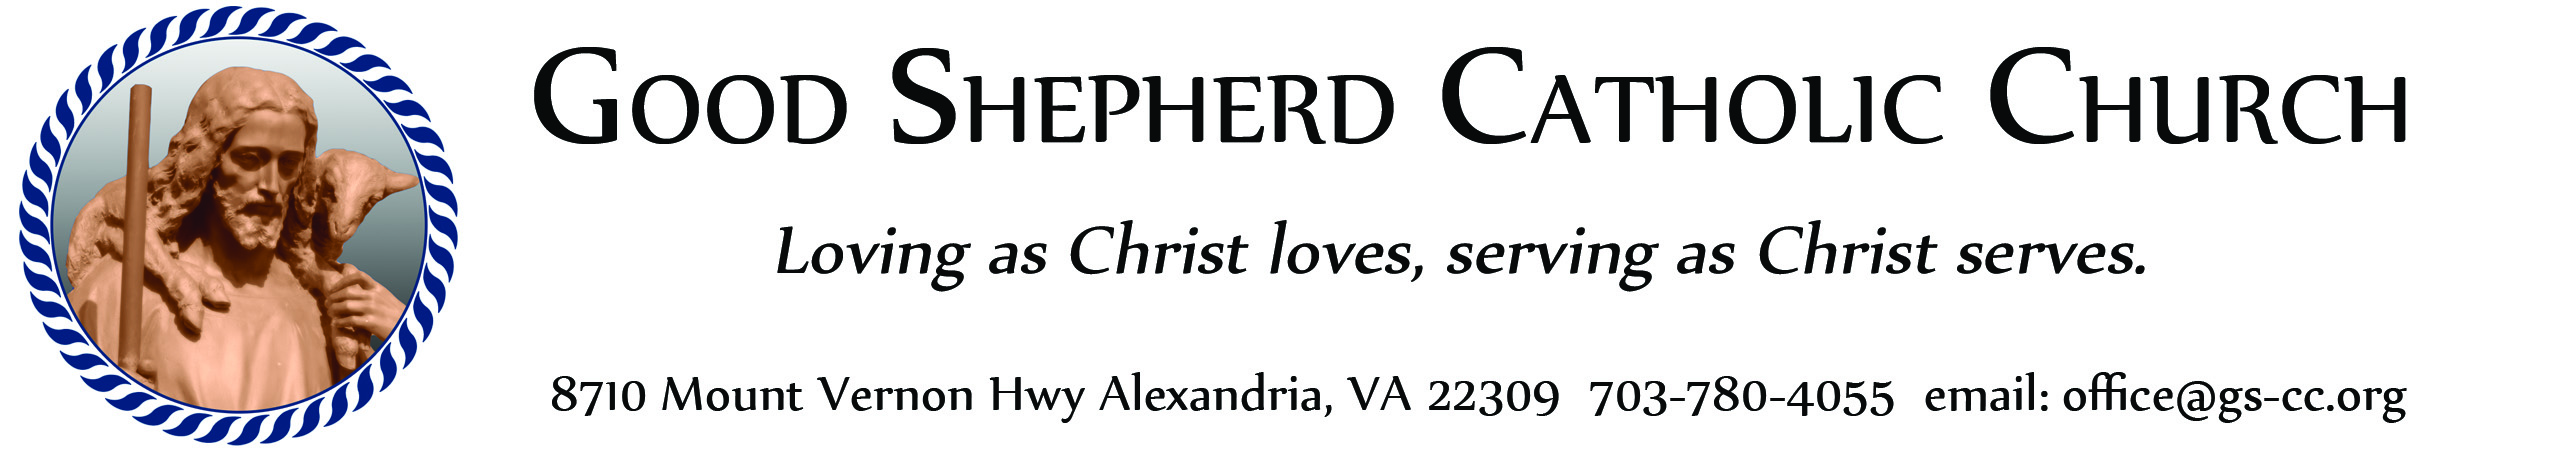 Good Shepherd Catholic Church logo